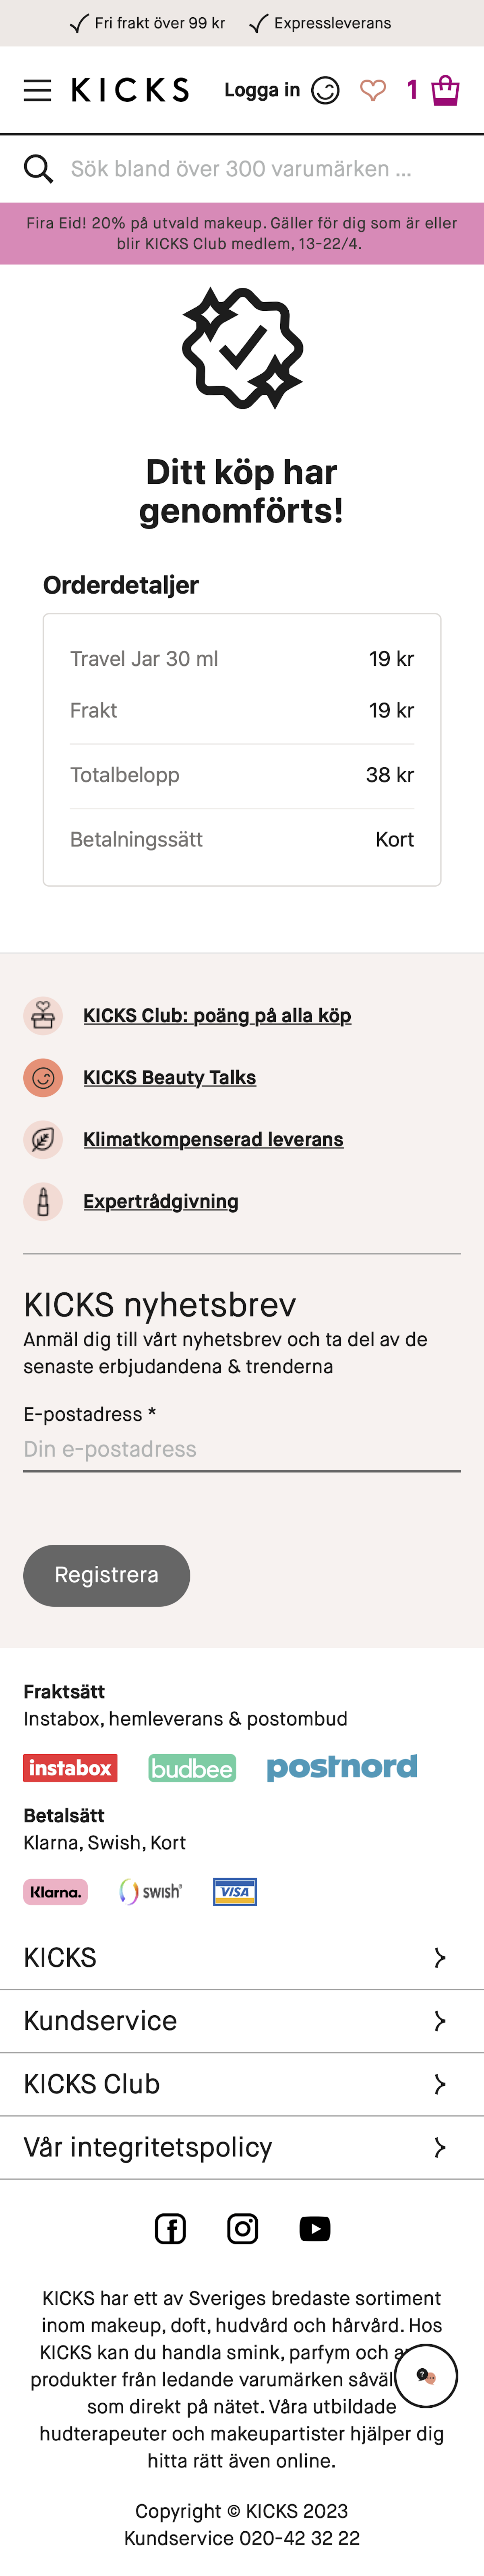 Mobile screenshot of Kicks